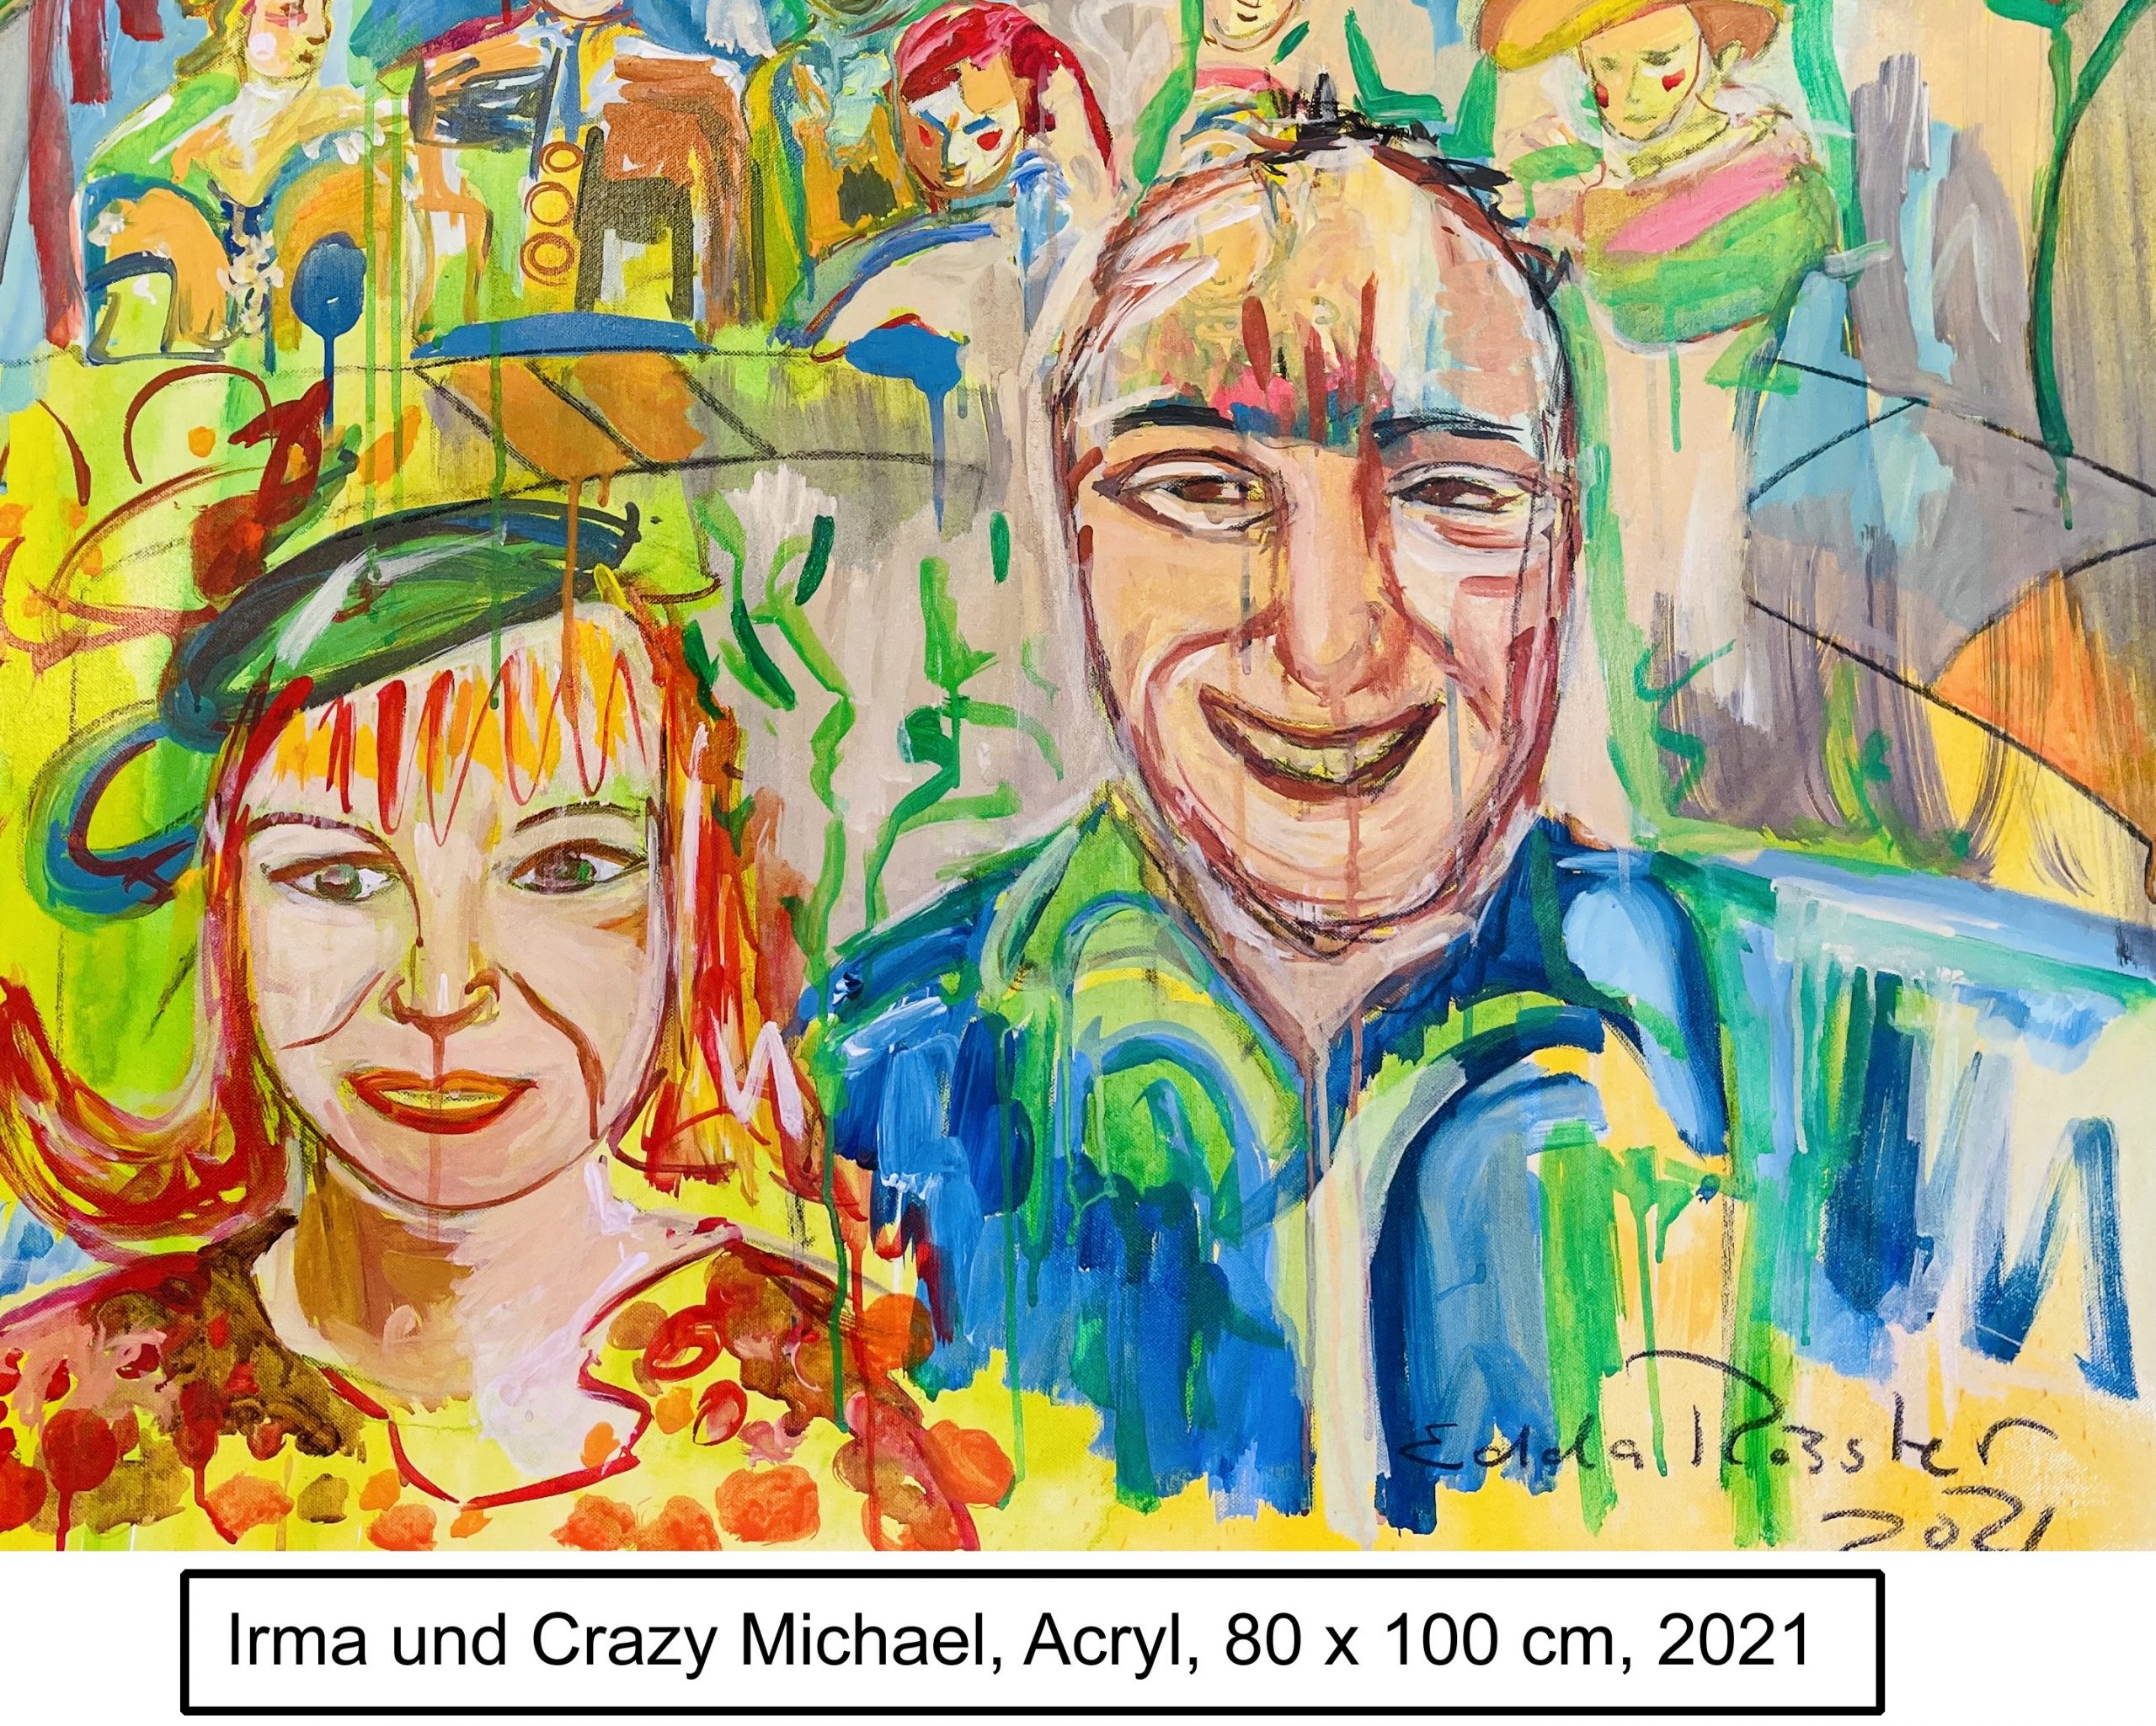 Irma und Crazy Michael Acryl auf Leinwand 80 x 100 cm Edda Rössler, 2021